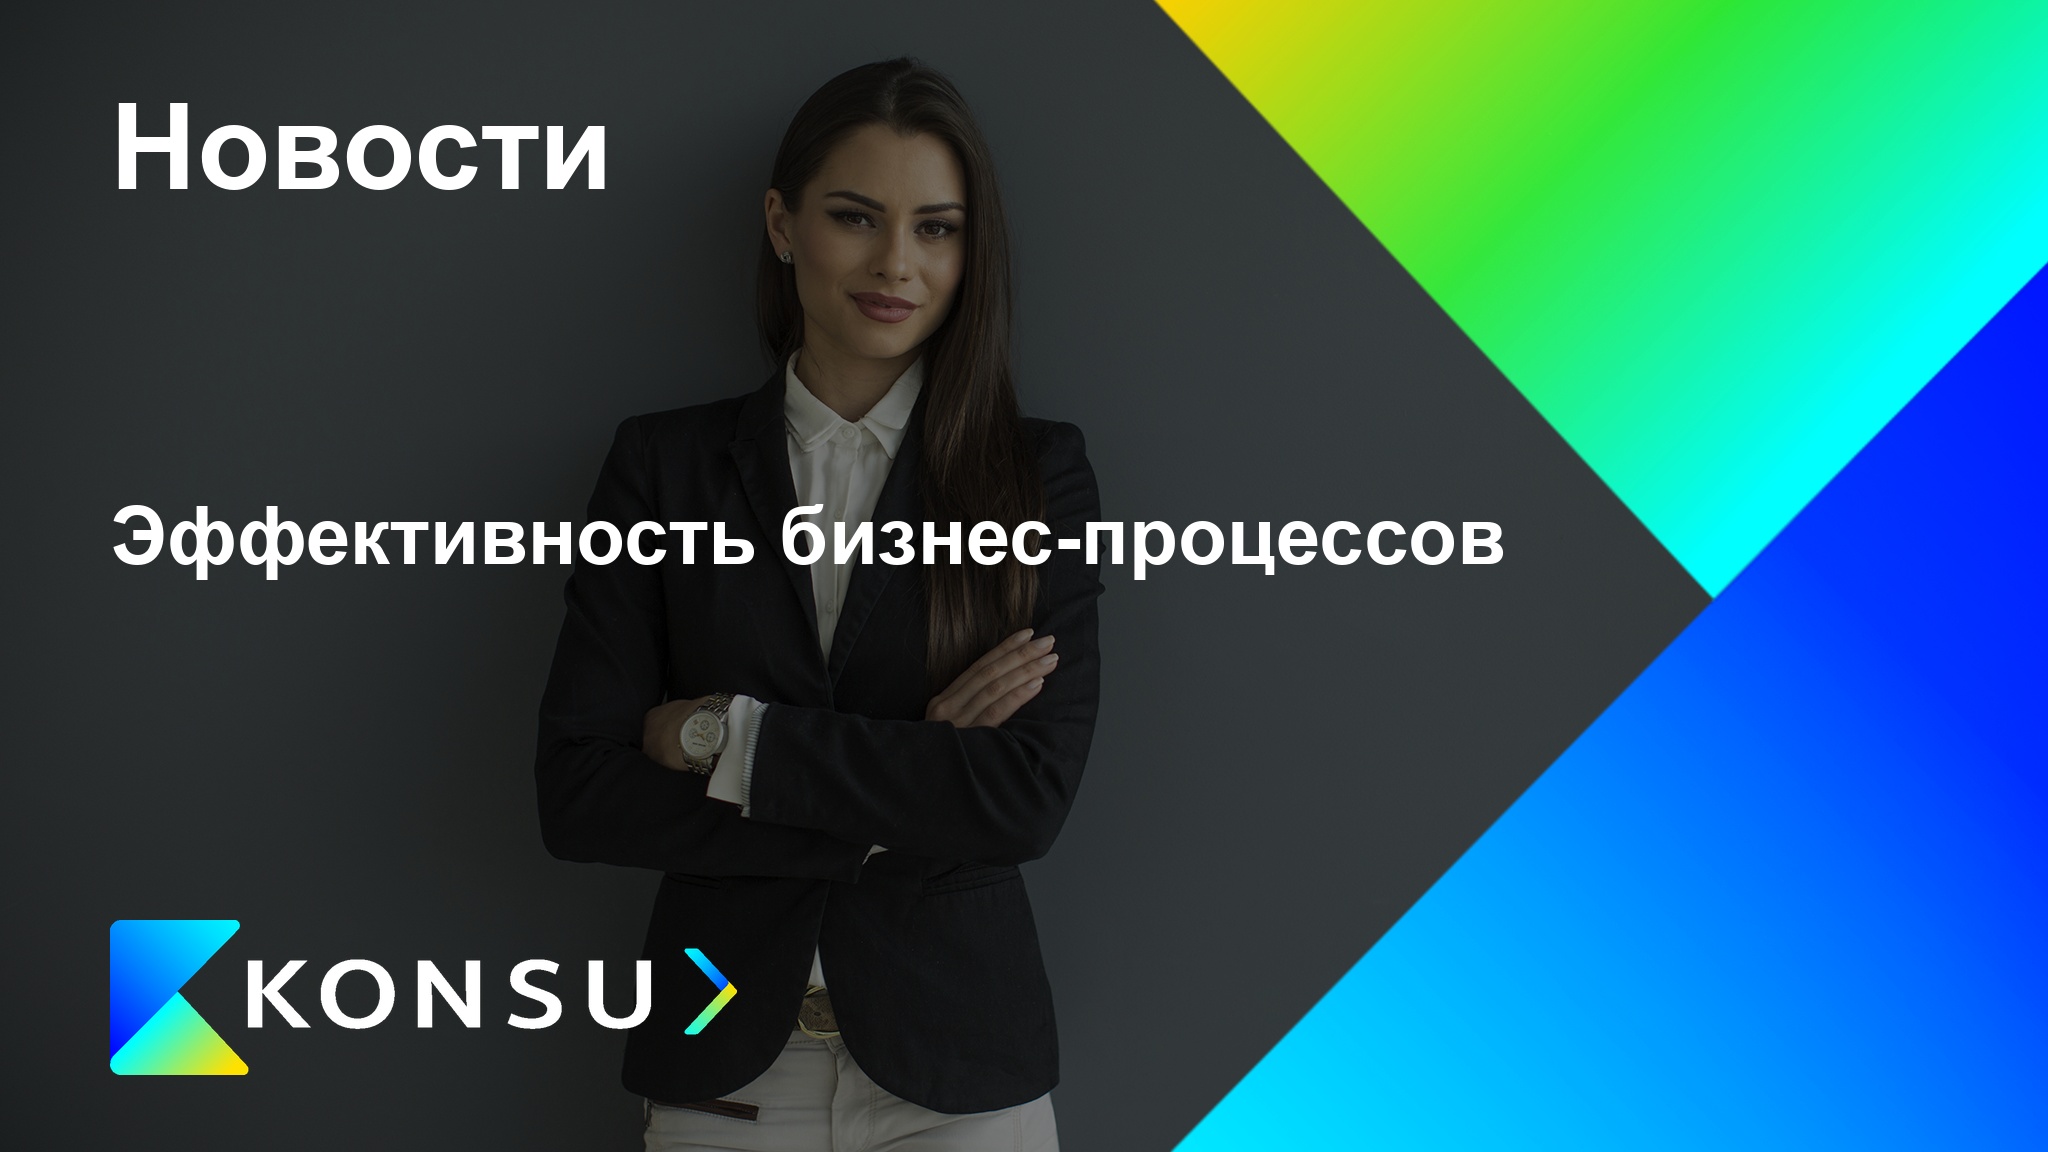 Effektivnost biznesprotsessov ru konsu outsourcing consulting ru